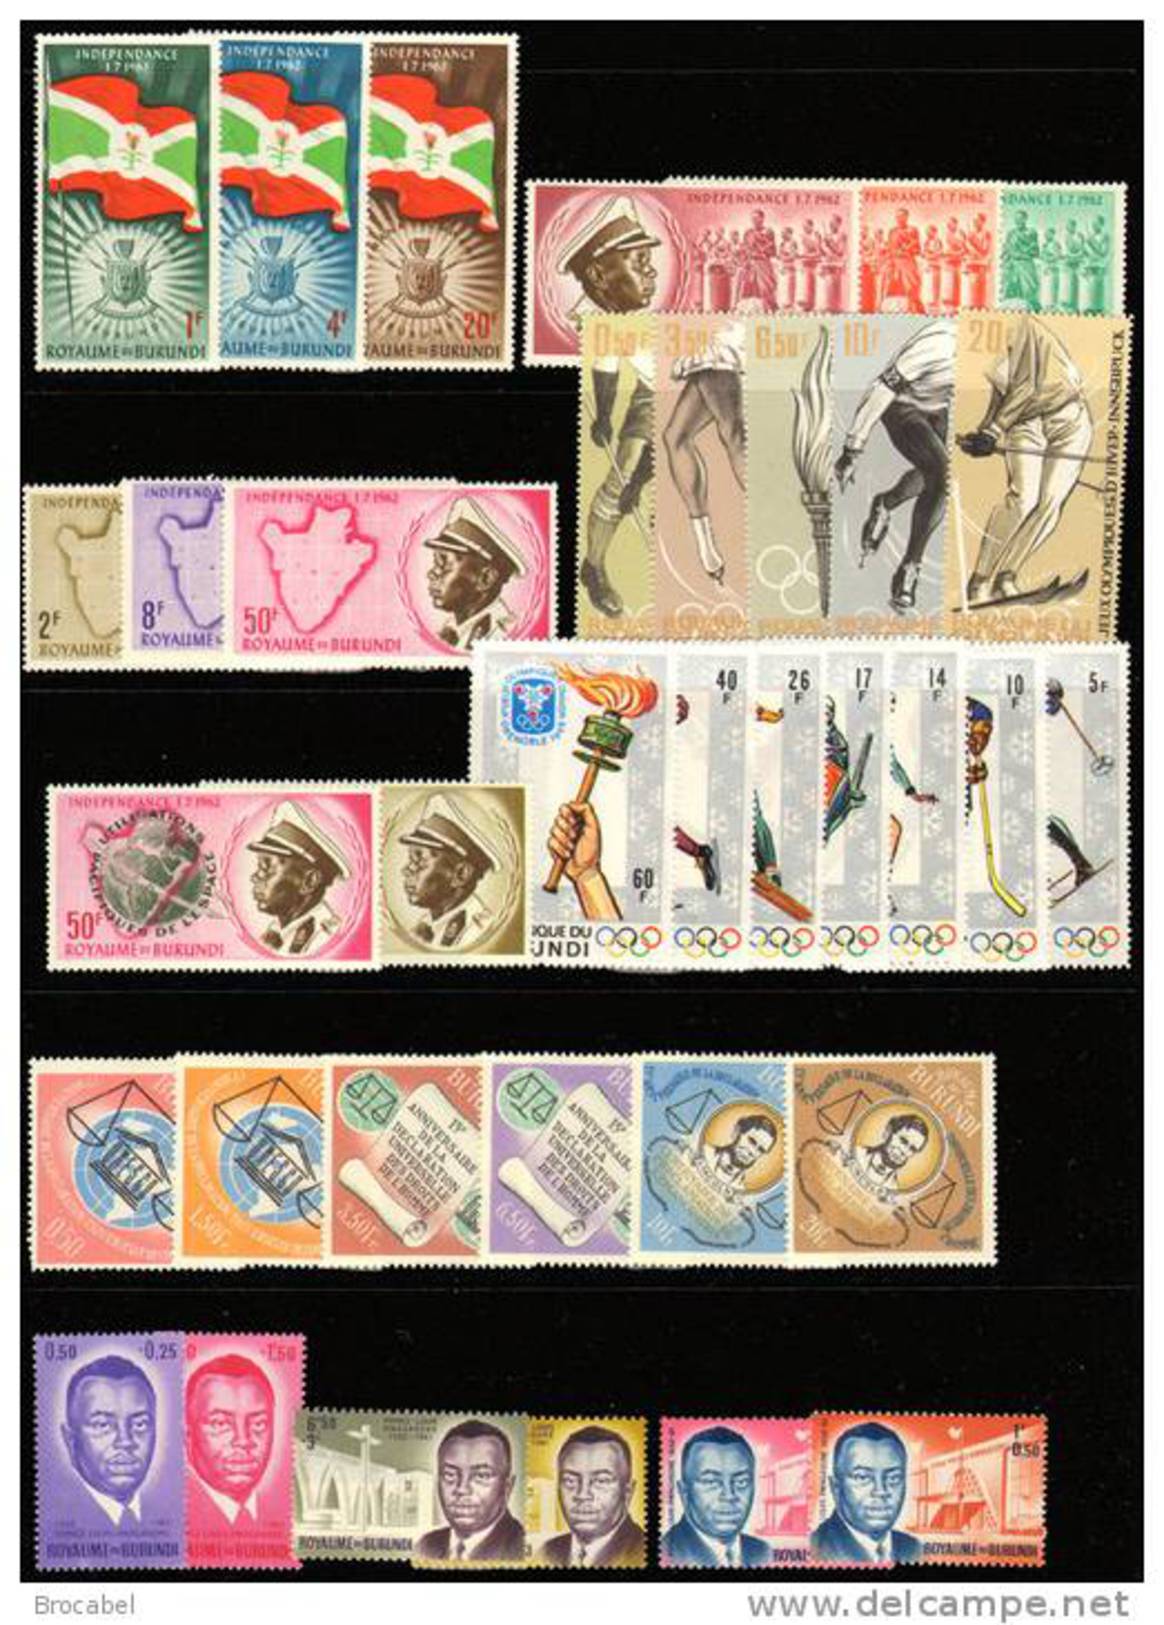 Burundi Small Collection** - MNH-  More Then 250 Stamps,  Cote 350 Euro++ SANS RESERVE Sart 1 Euro - Sammlungen